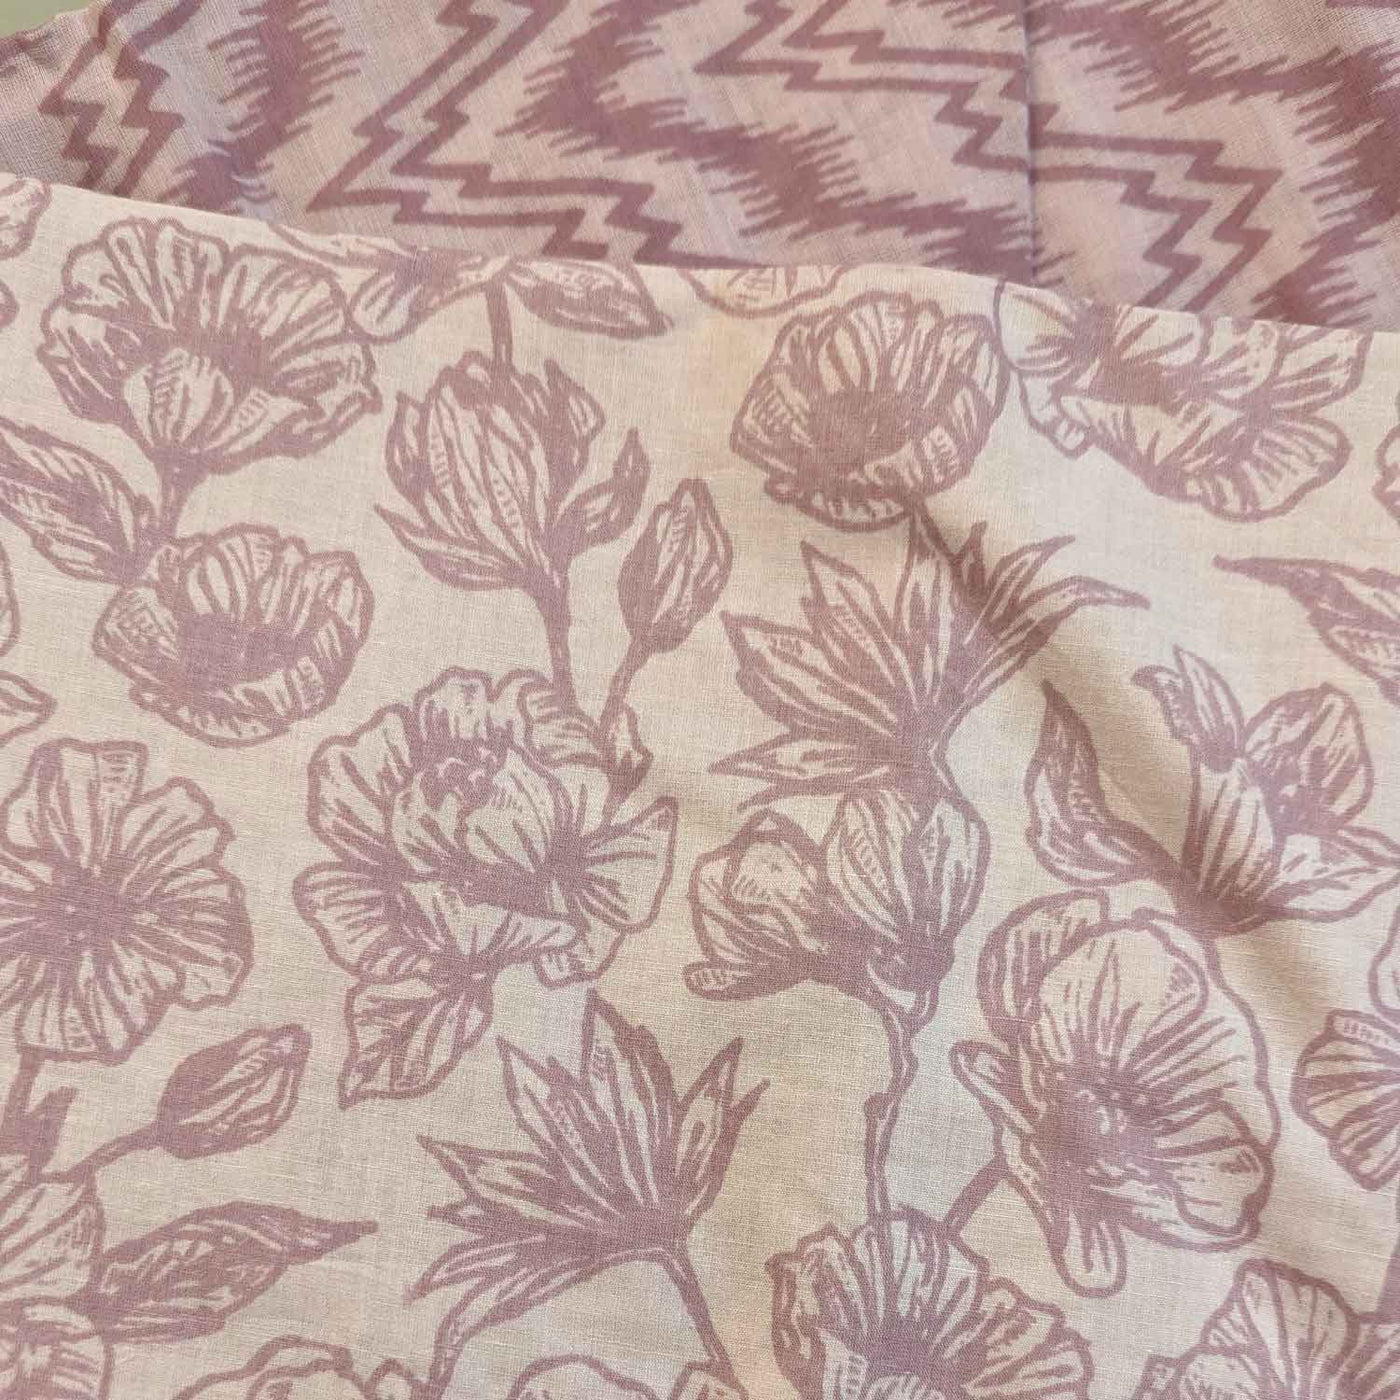 Onion Pink Floral / Chevron Cotton Fabric Combo